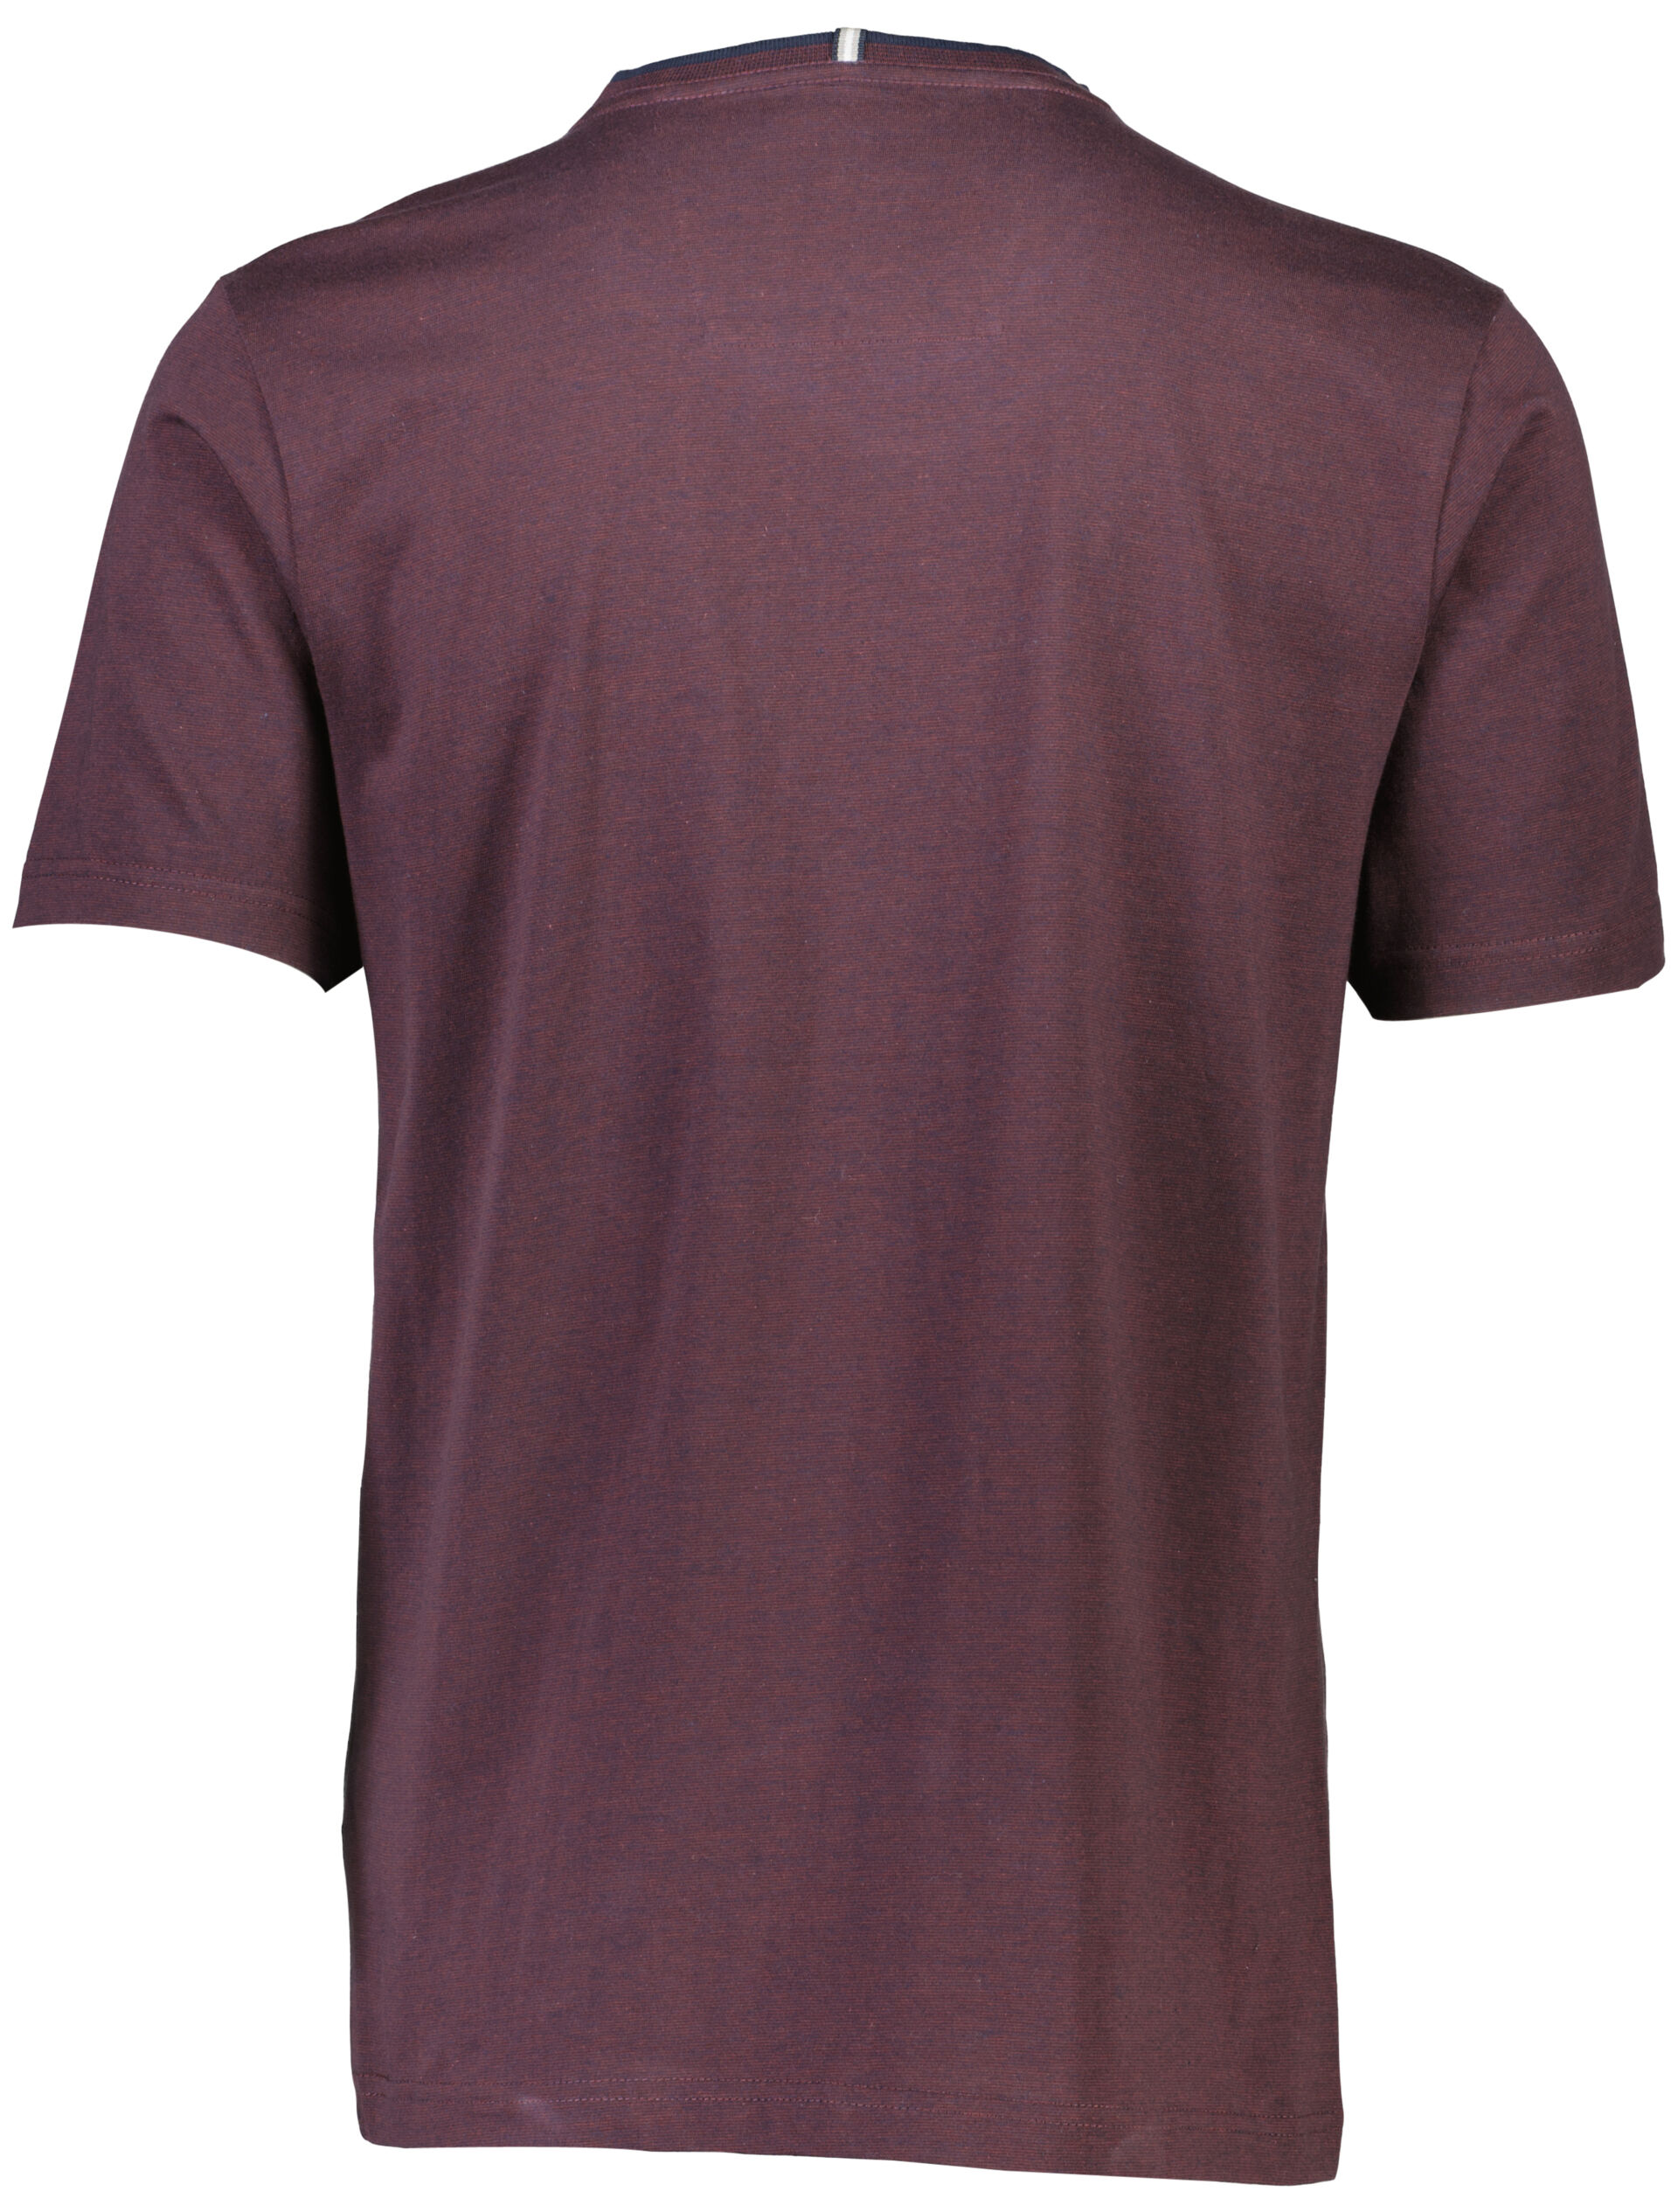 Bison  T-shirt 80-400106